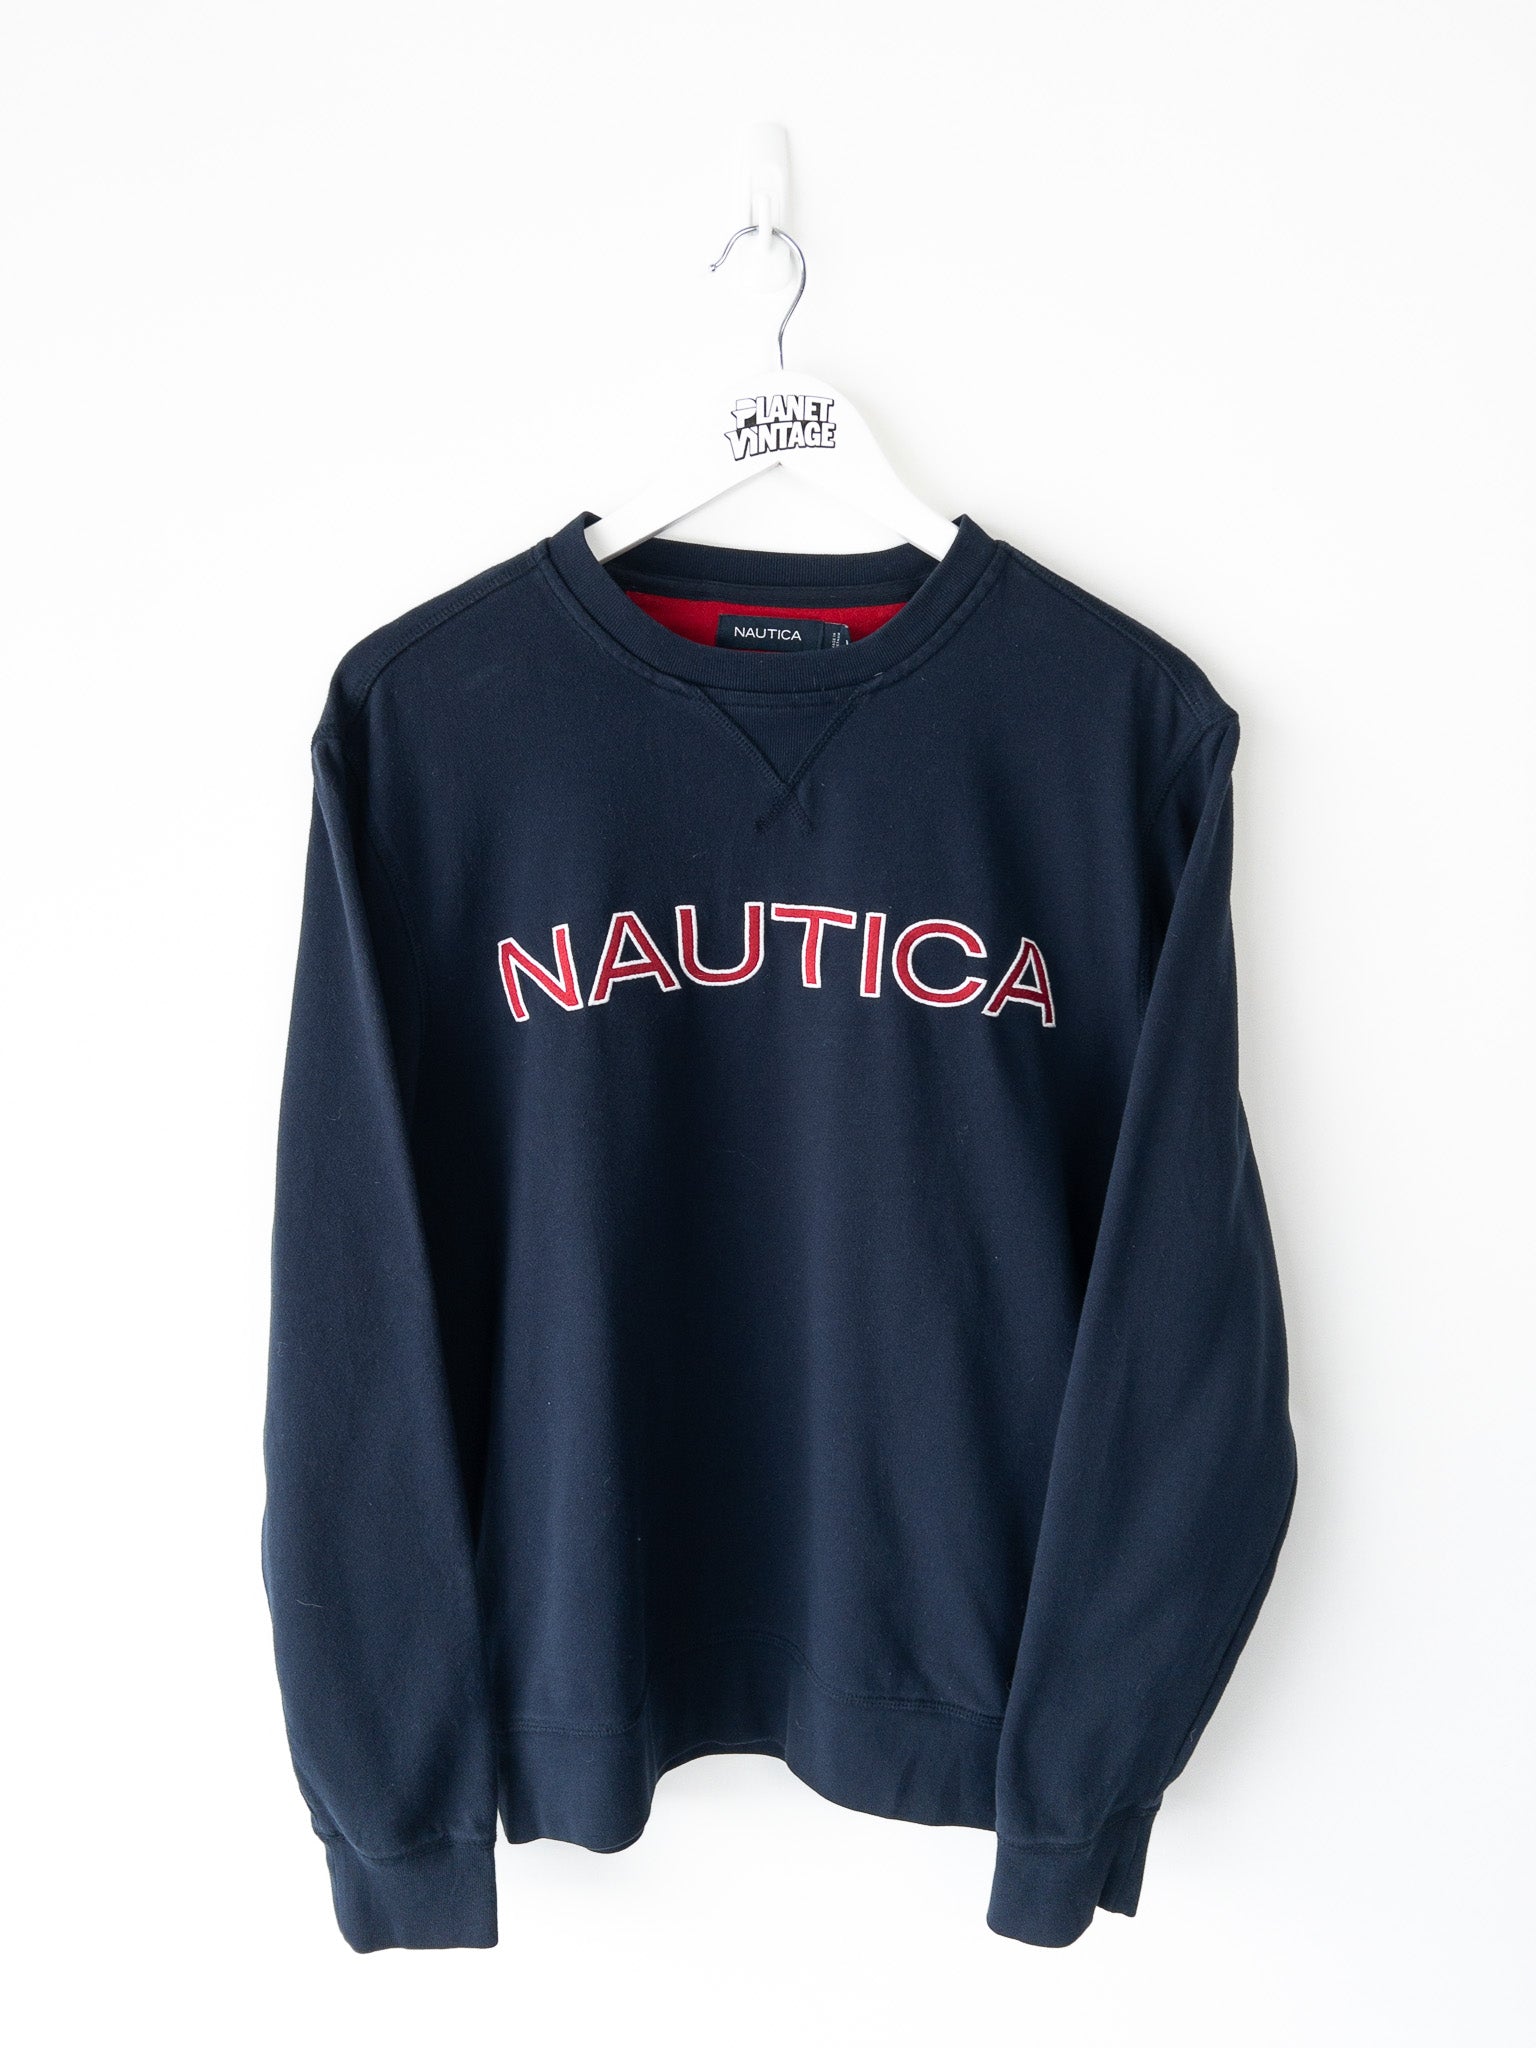 Vintage Nautica Sweatshirt (M)